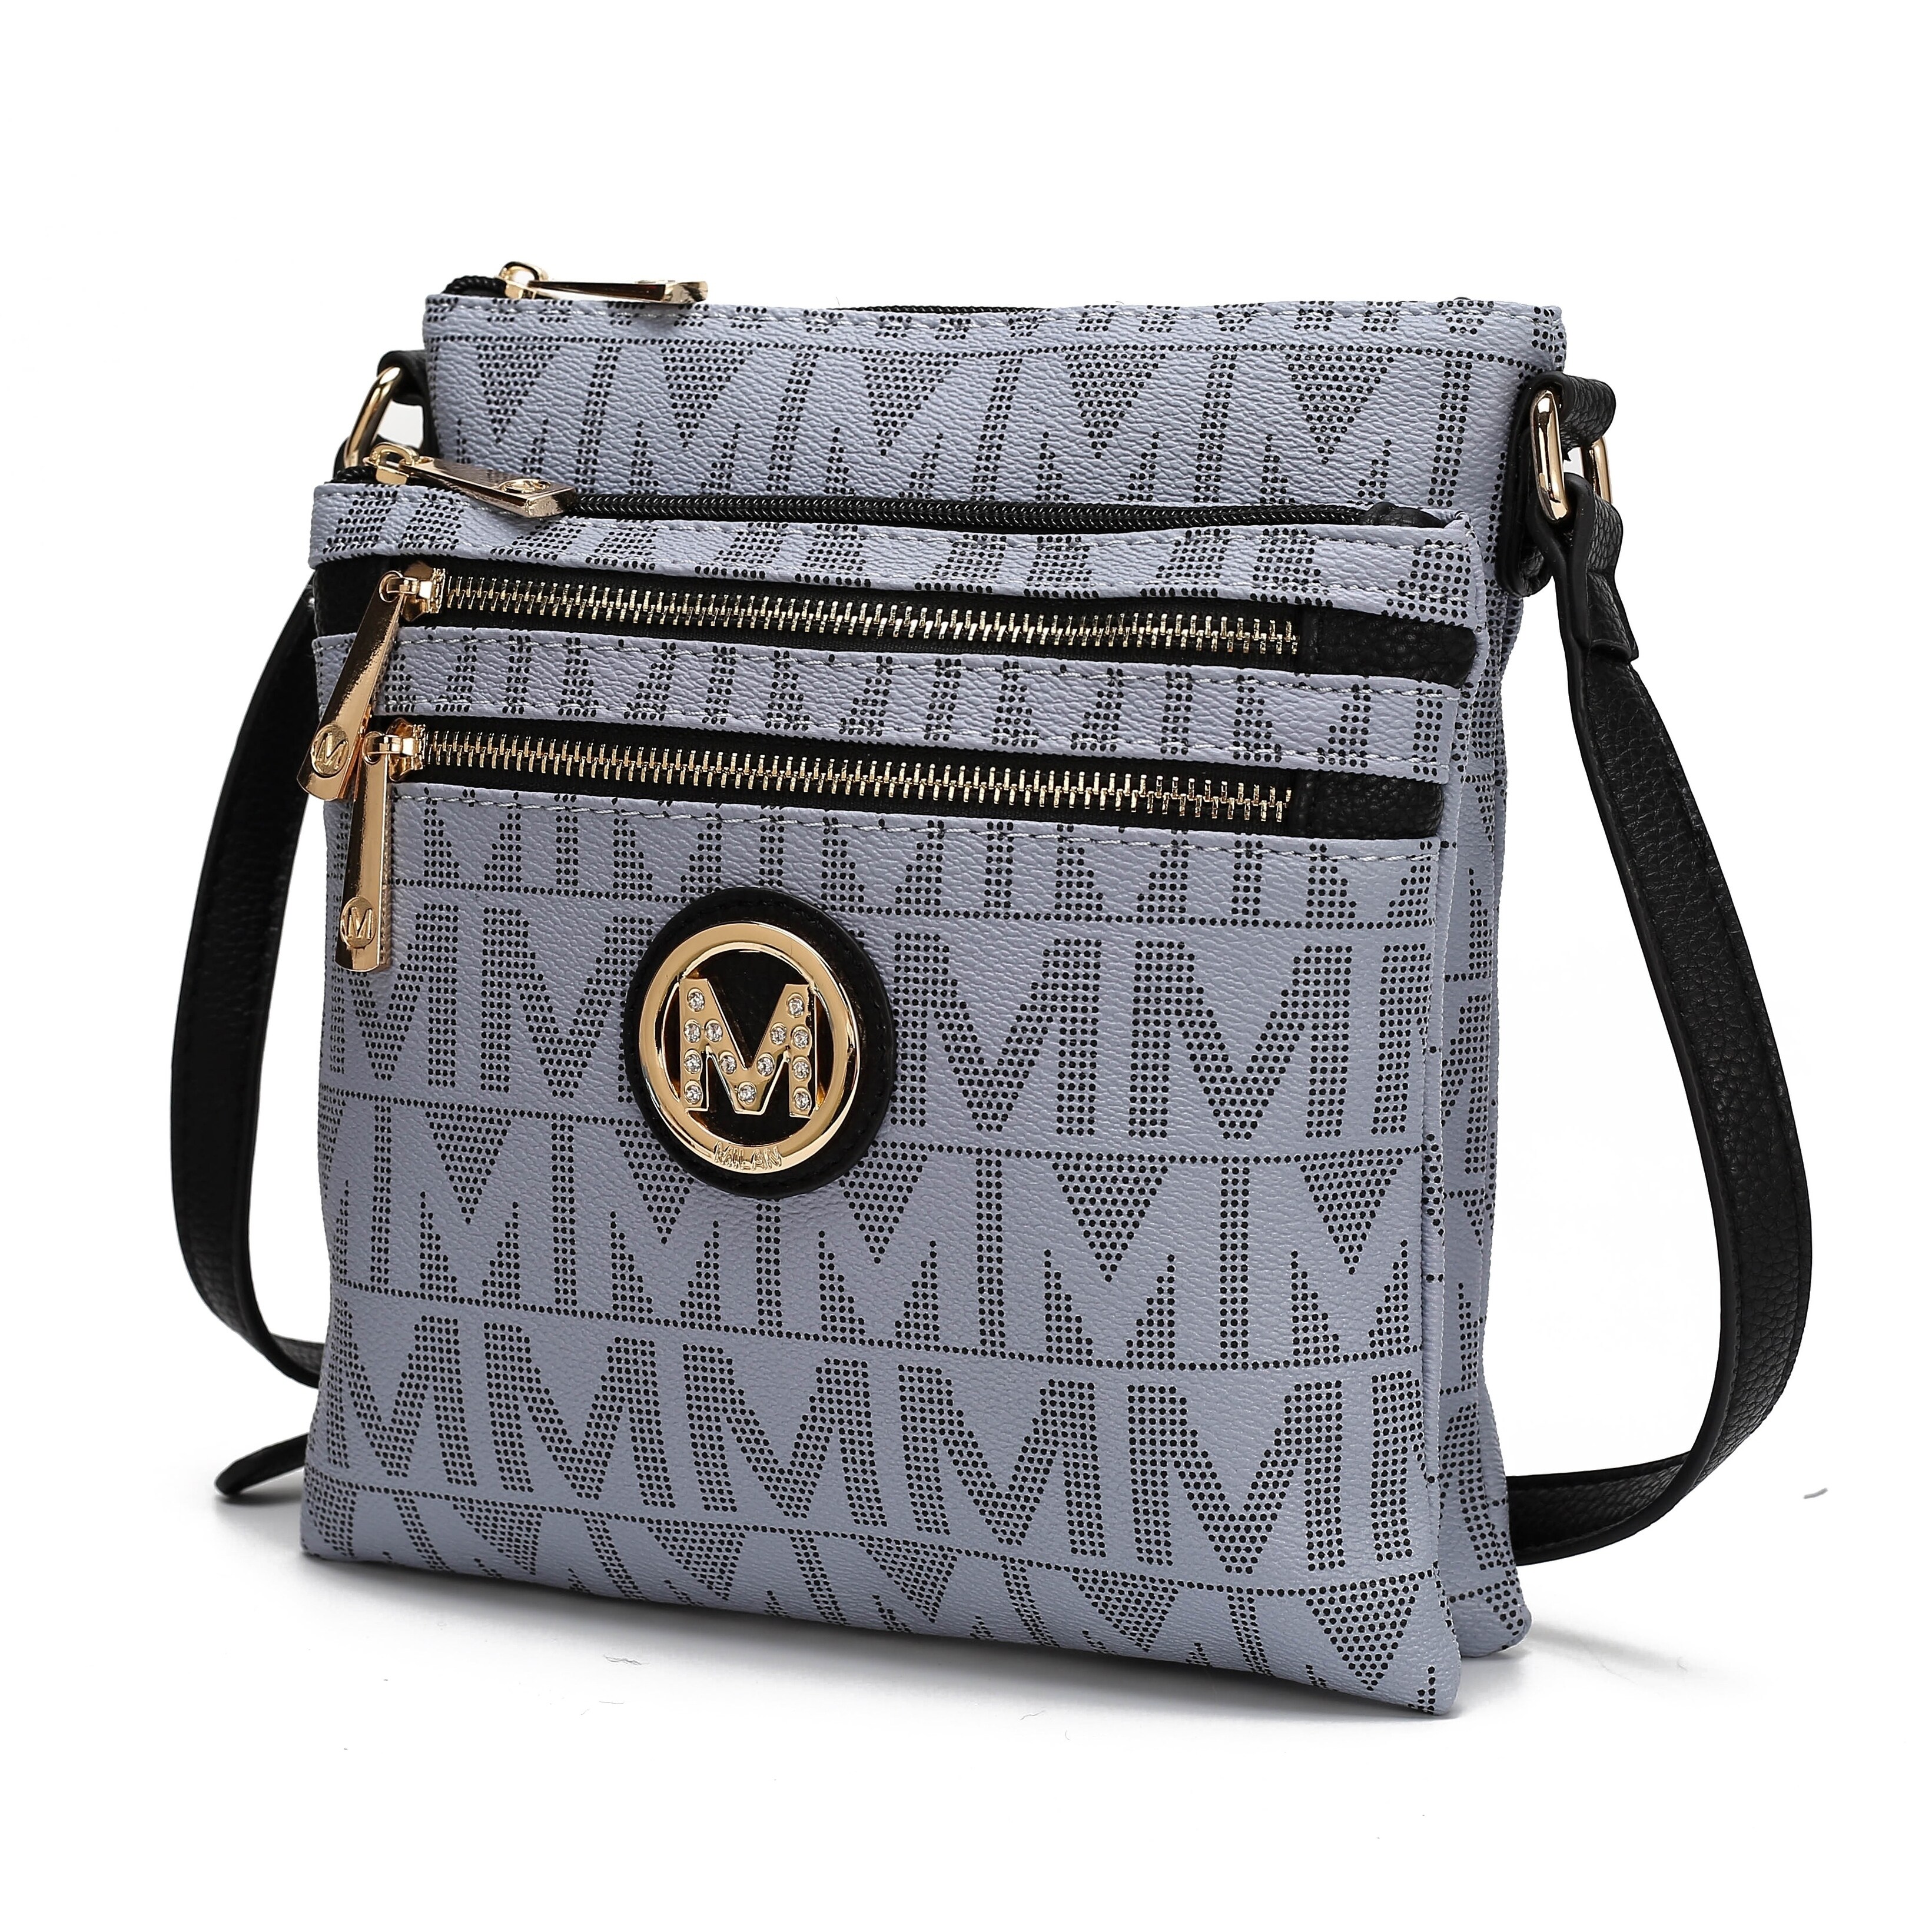 Buy Women Shoulder Bag Camren M Signature Crossbody Bag by Mia K. Farrow at